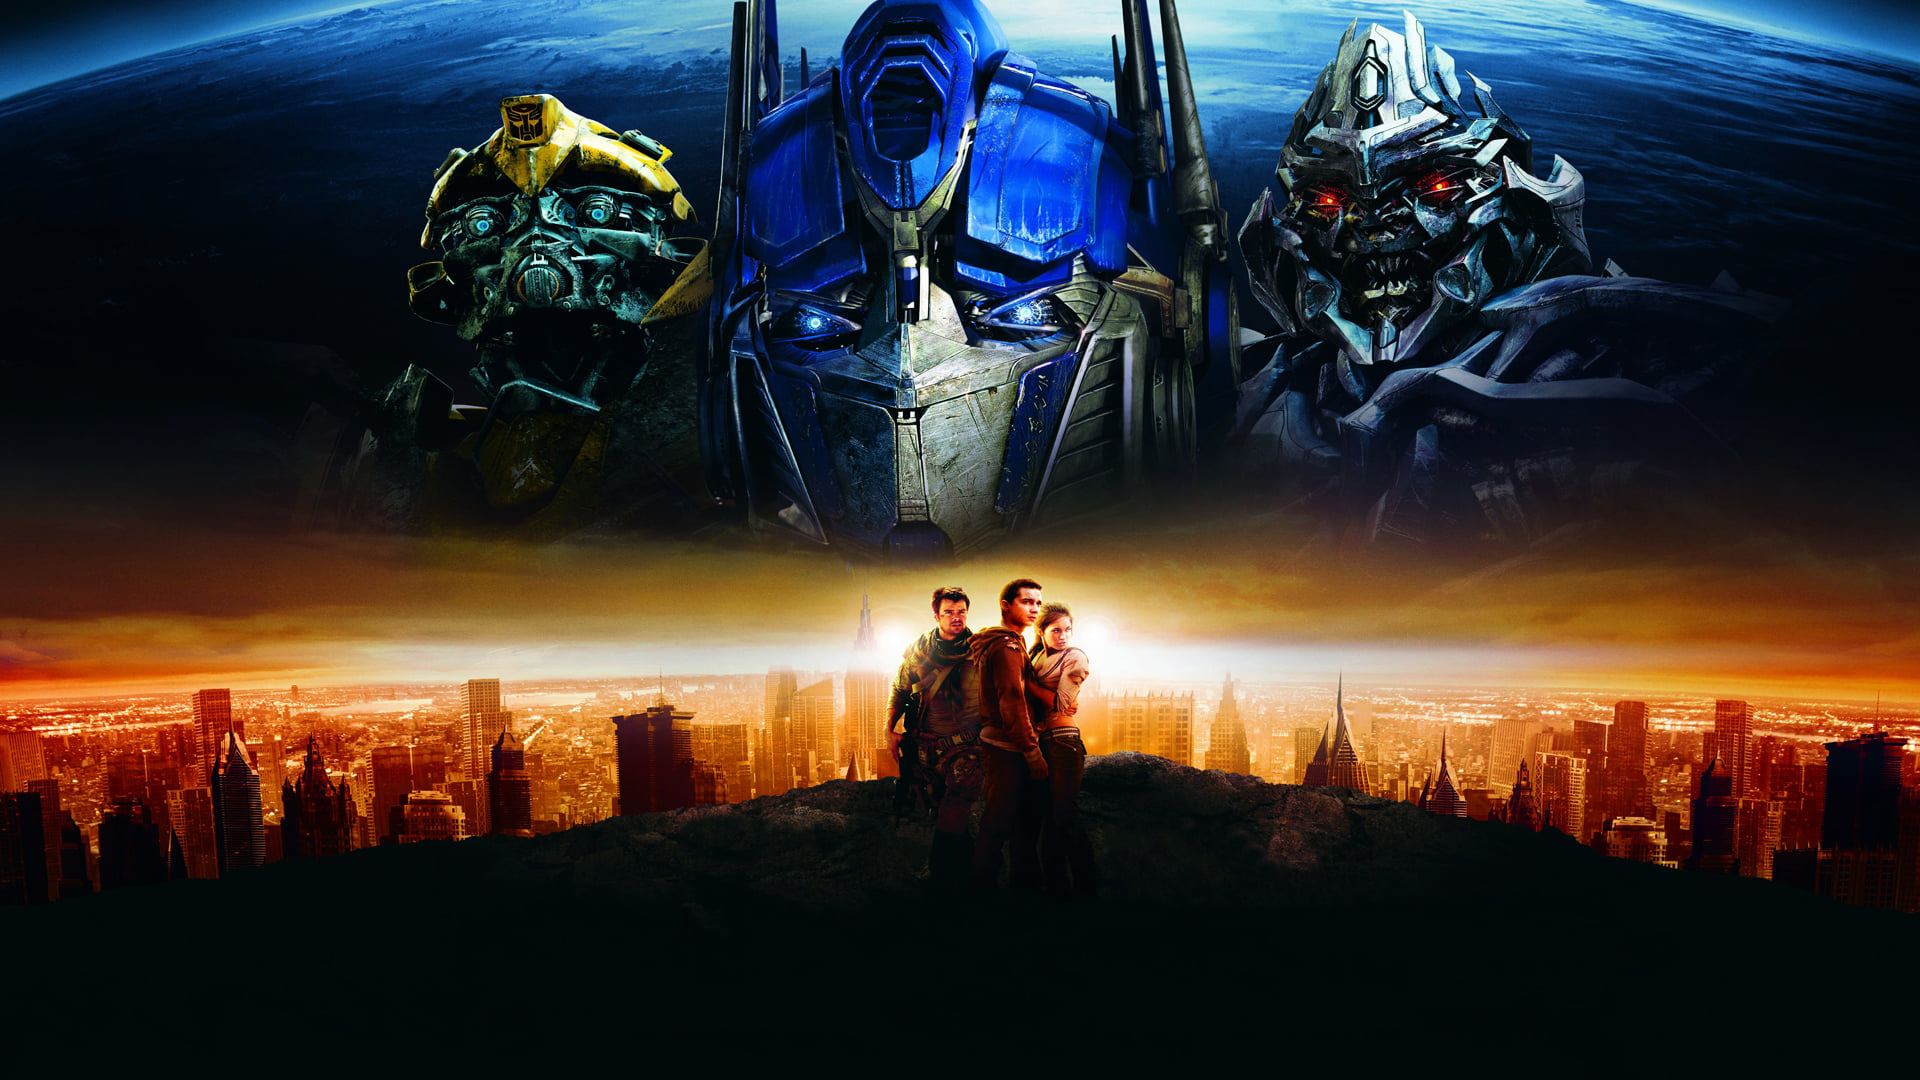 General 1920x1080 Autobots Decepticons Optimus Prime Bumblebee (transformers) Transformers movies digital art